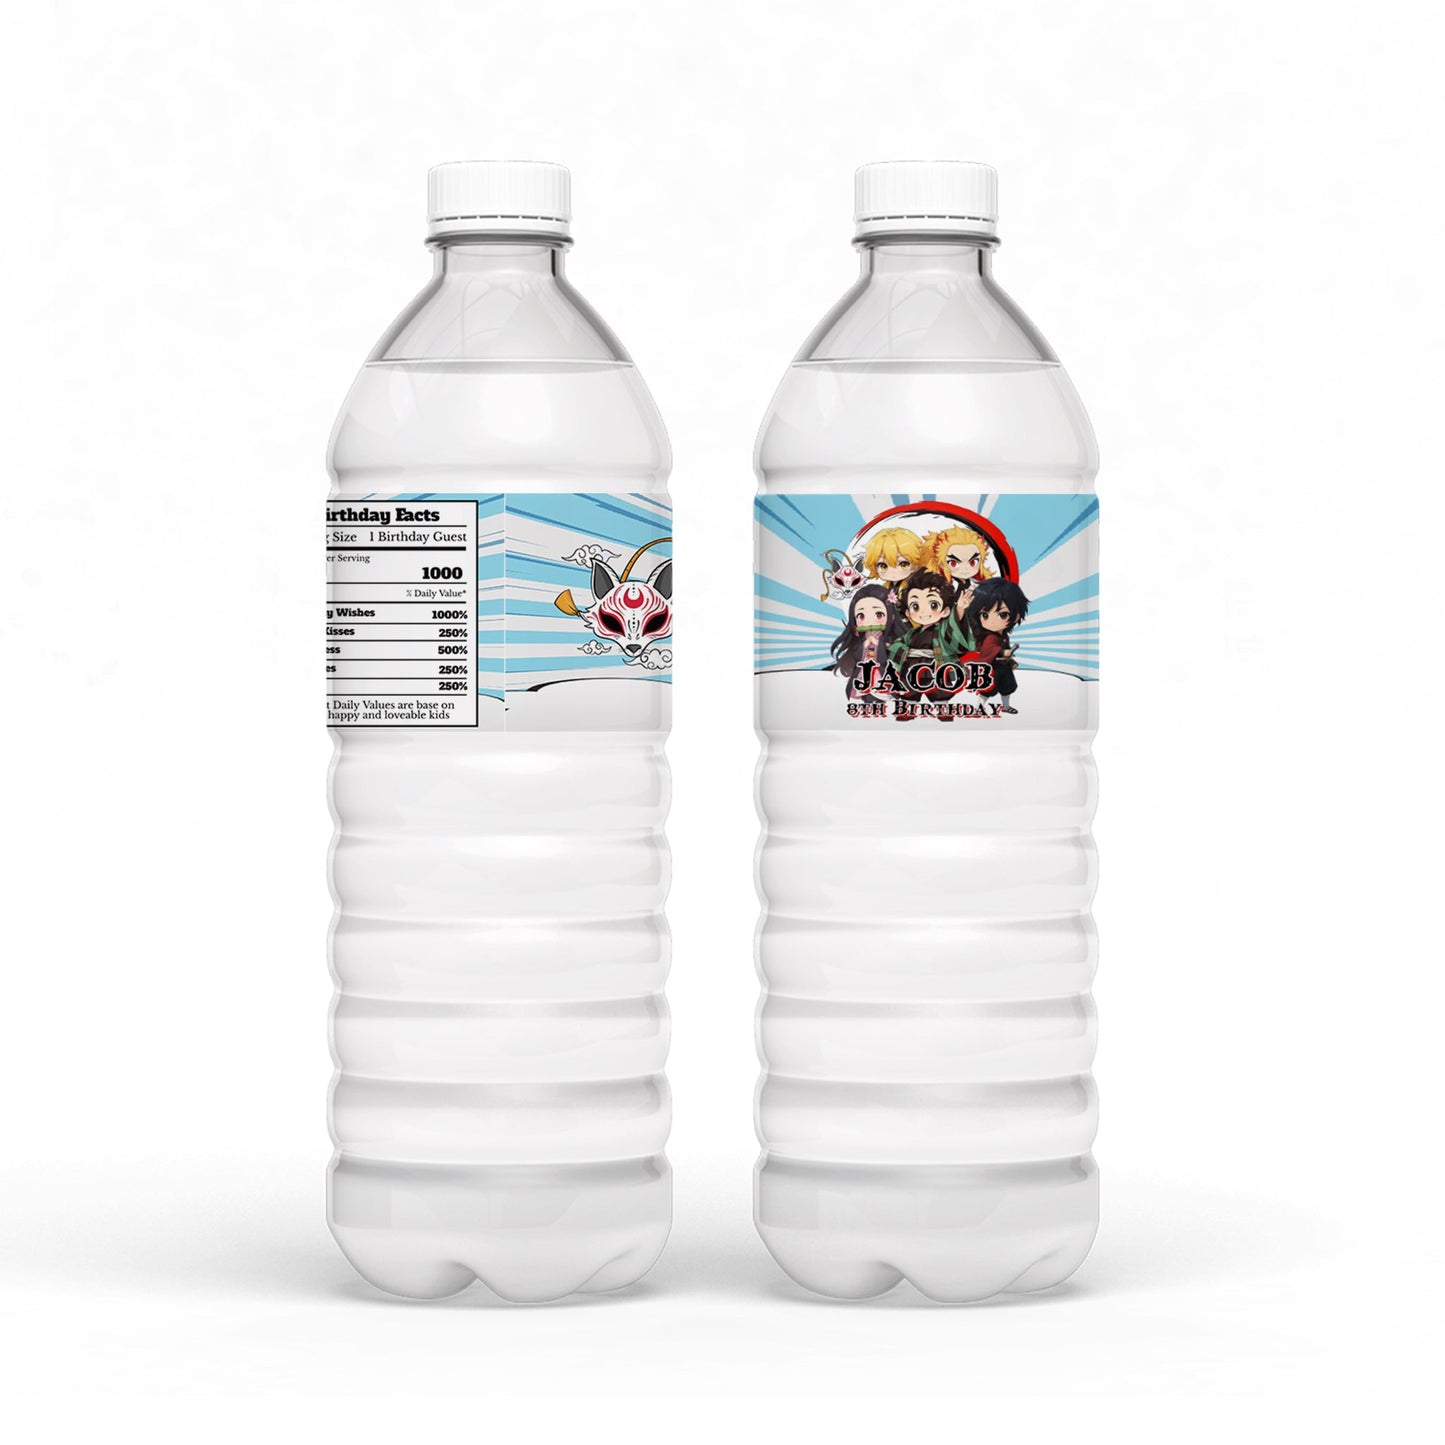 Water bottle label featuring Demon Slayer design